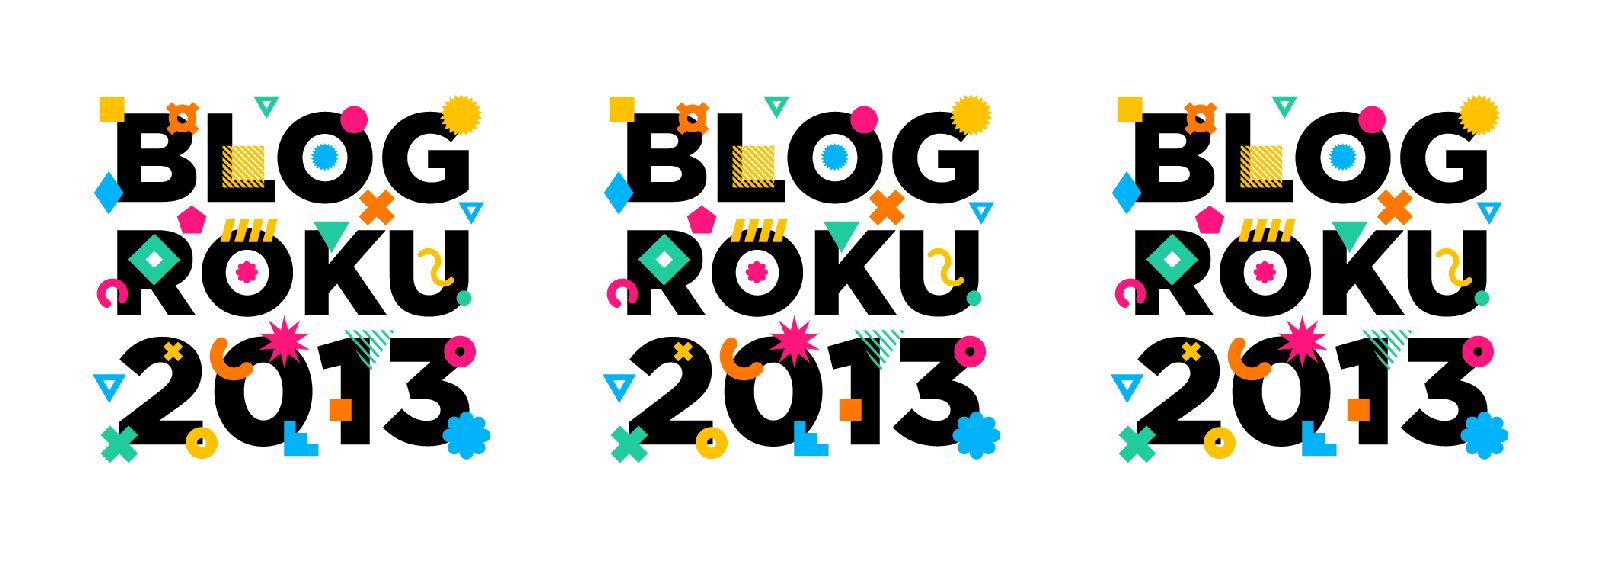 Blog roku 2013